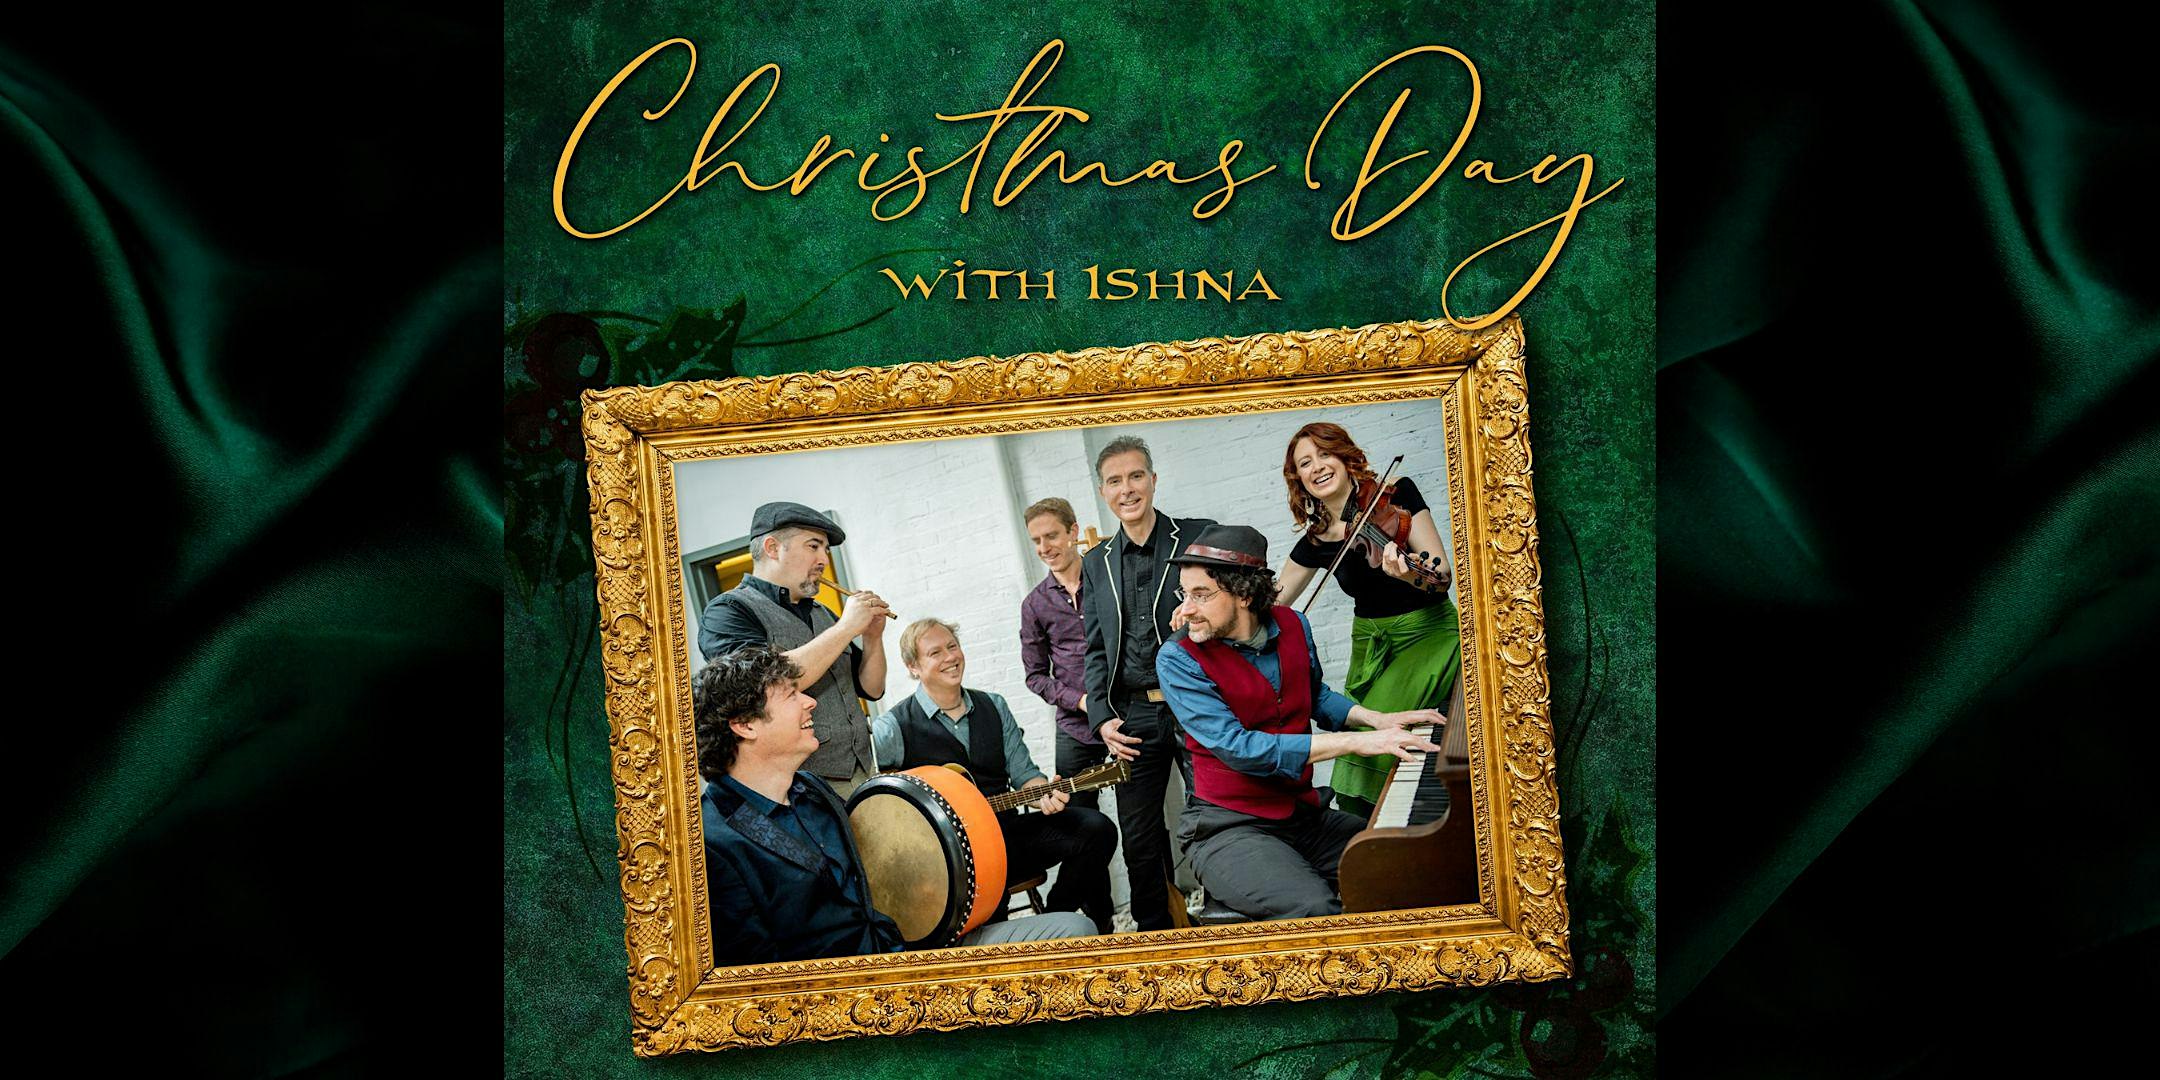 An Irish Christmas Day with Ishna ft. Irish Tenor Ciaran Nagle & Tara Novak